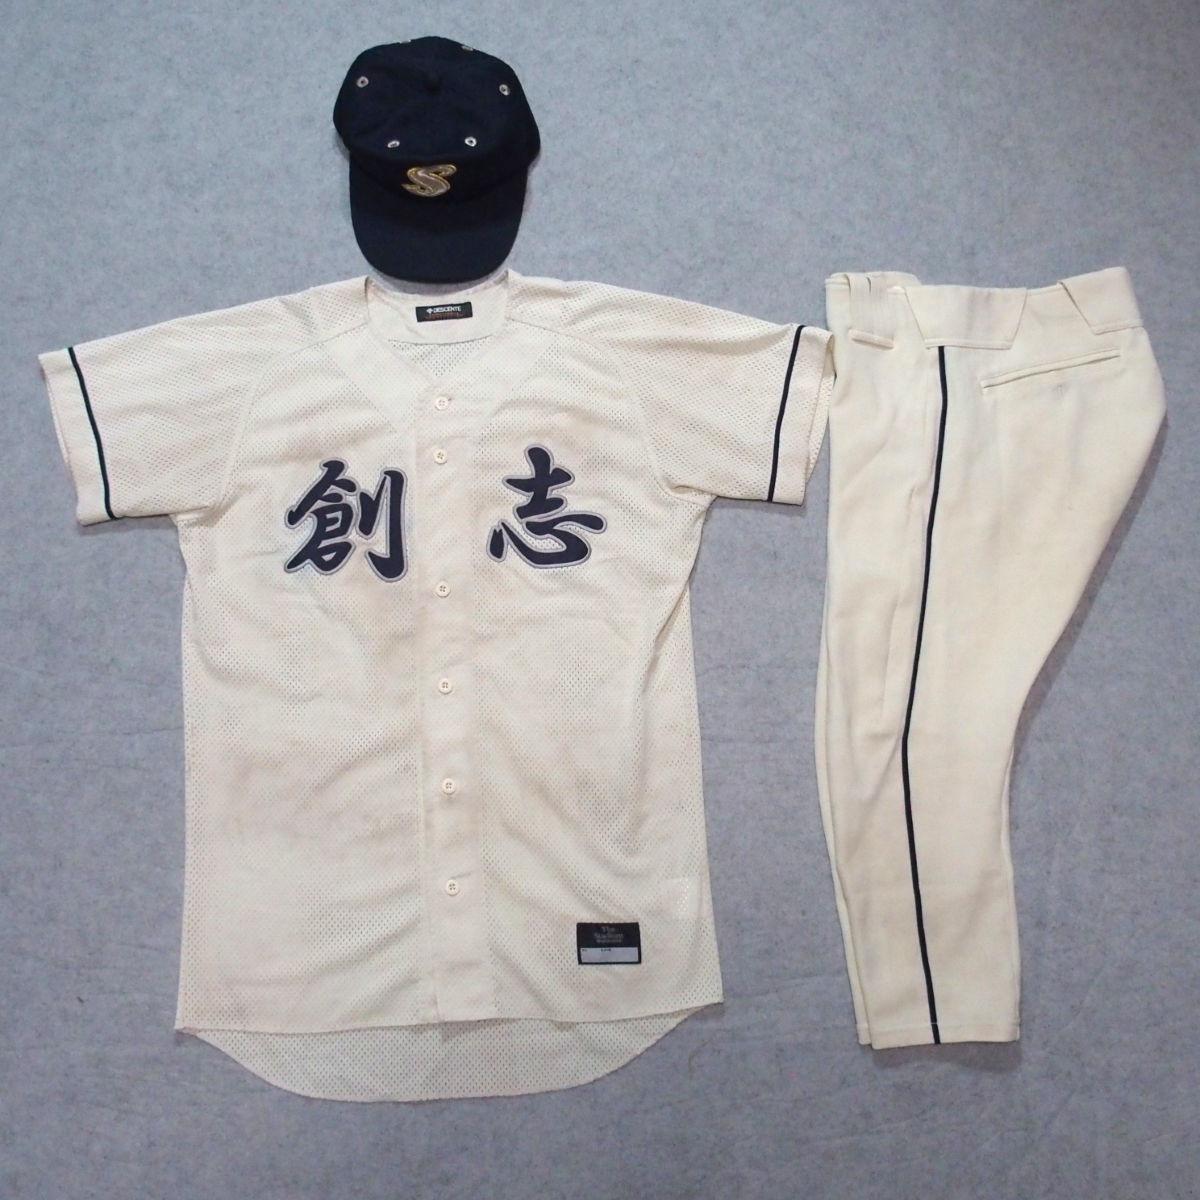 .. an educational institution hardball baseball part uniform set 